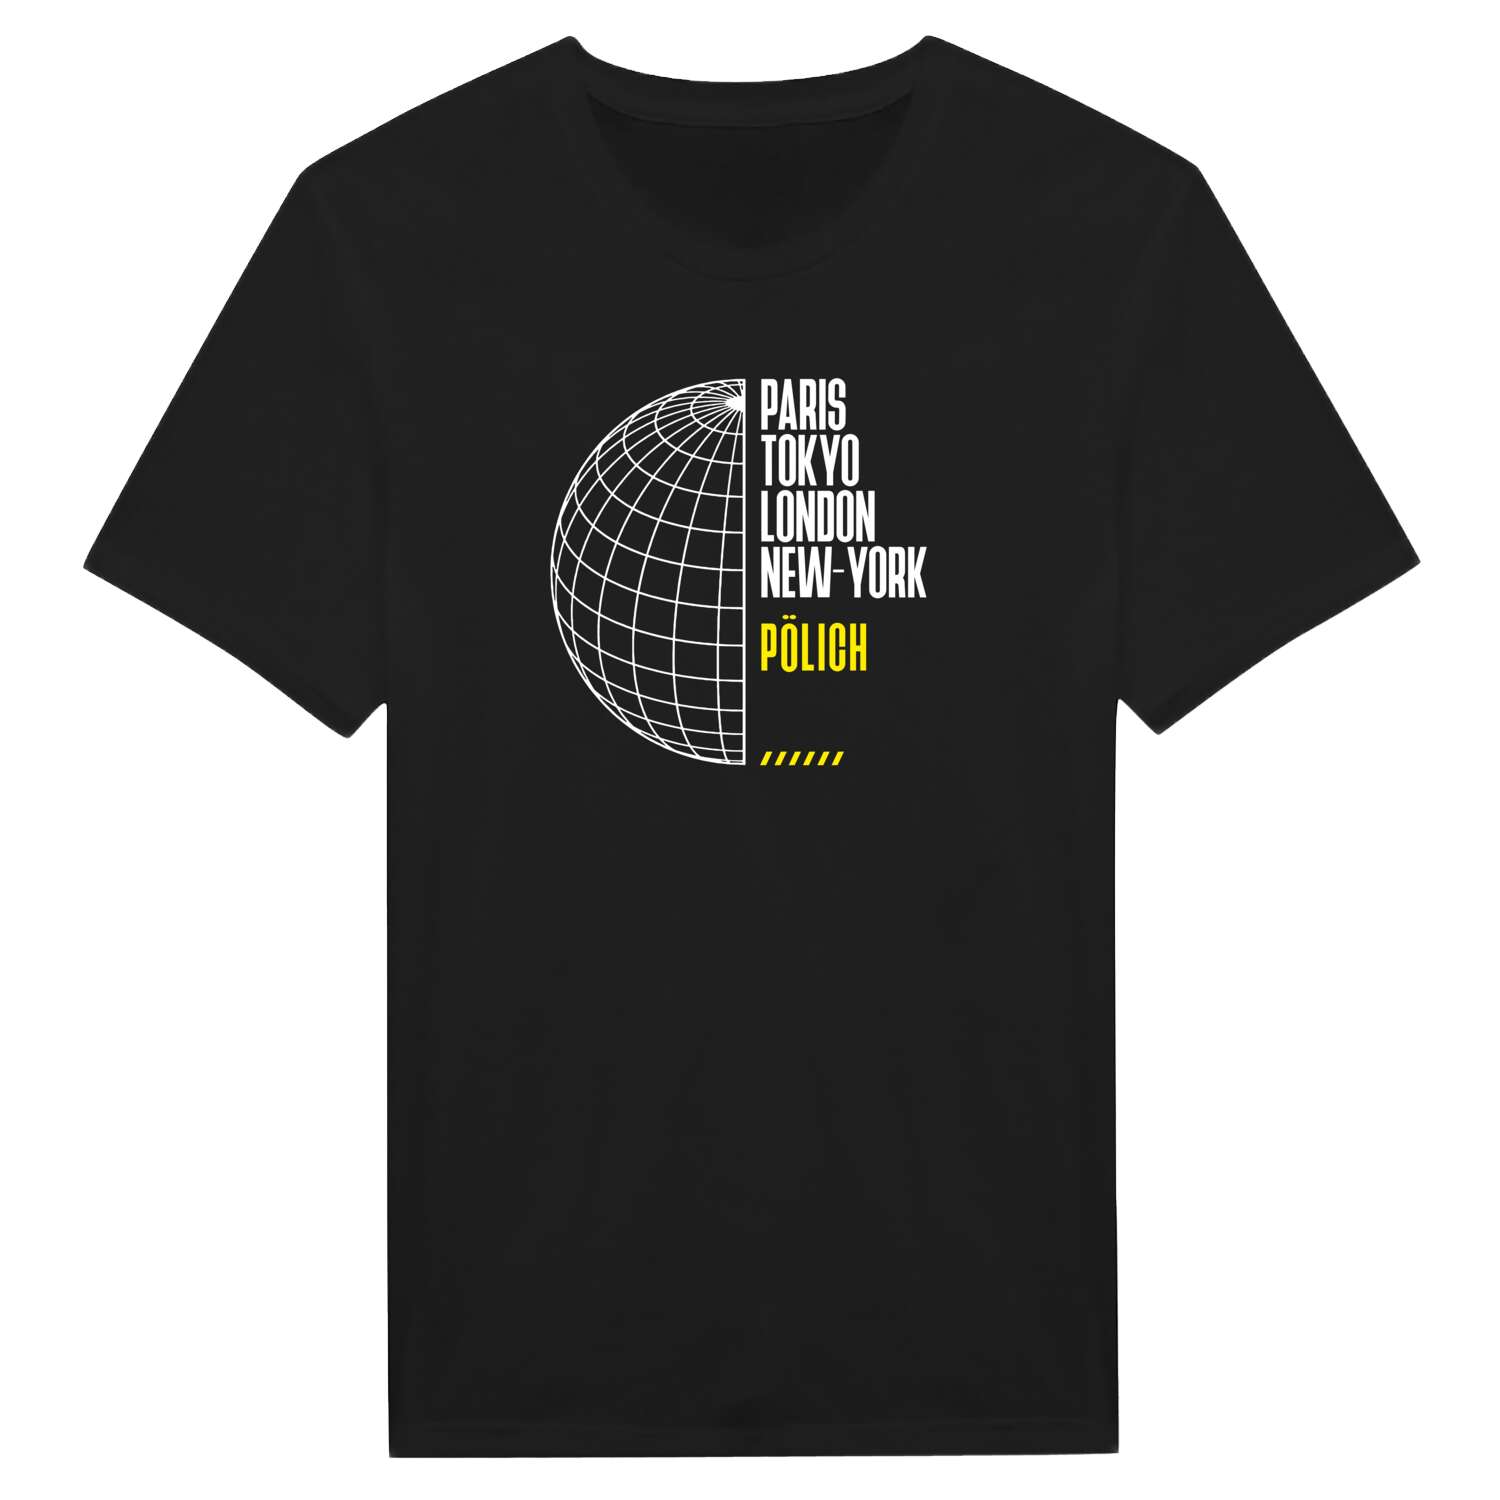 Pölich T-Shirt »Paris Tokyo London«